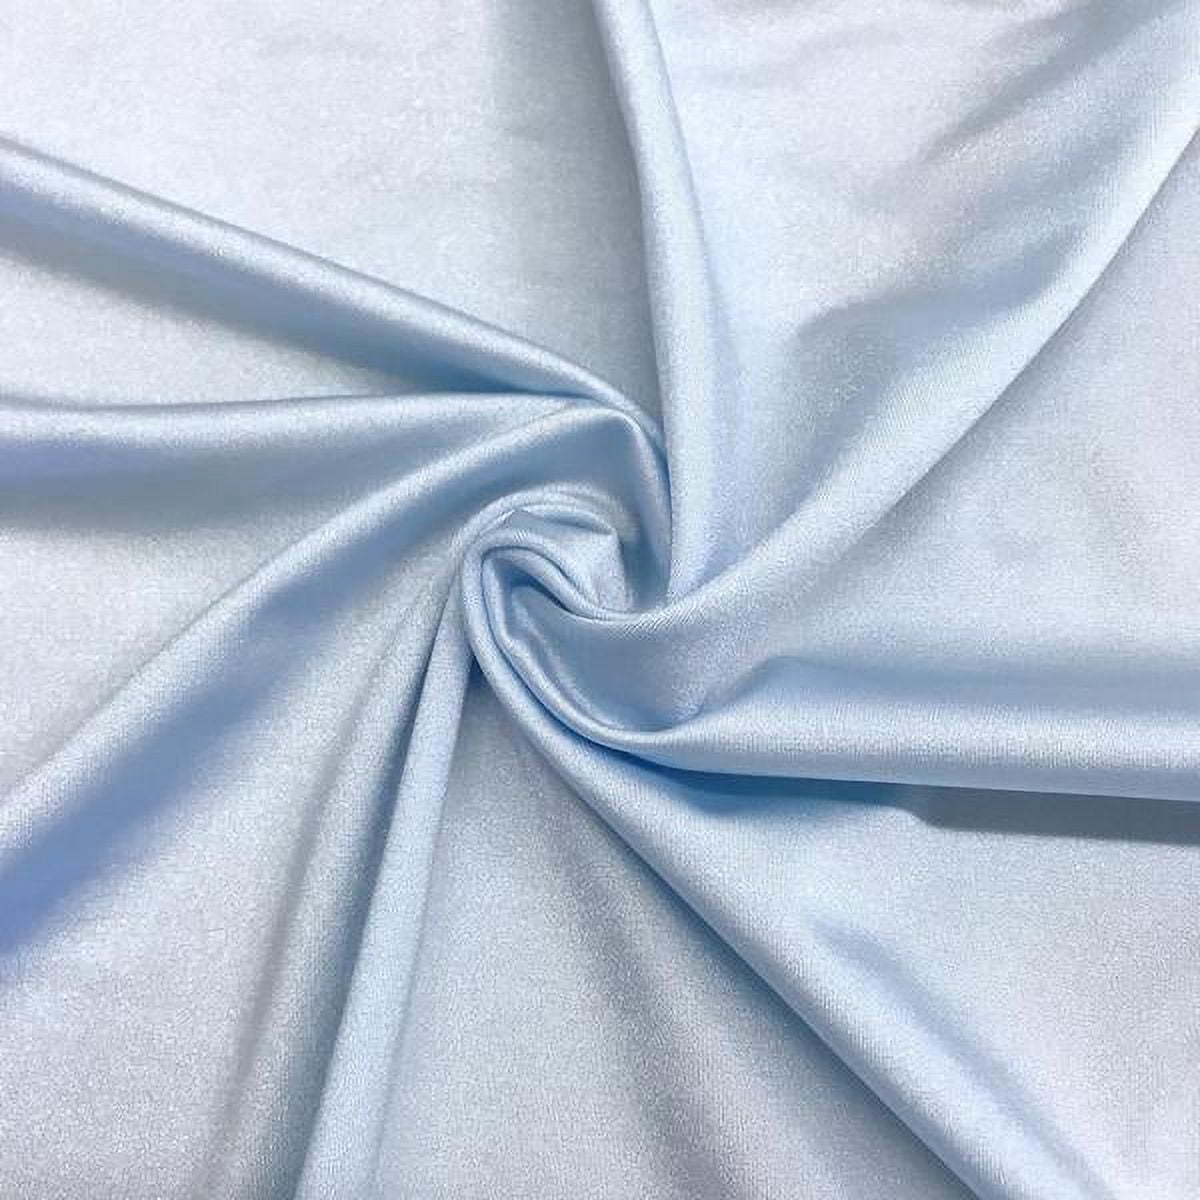 Teal Luxury Nylon Spandex Fabric By The Yard